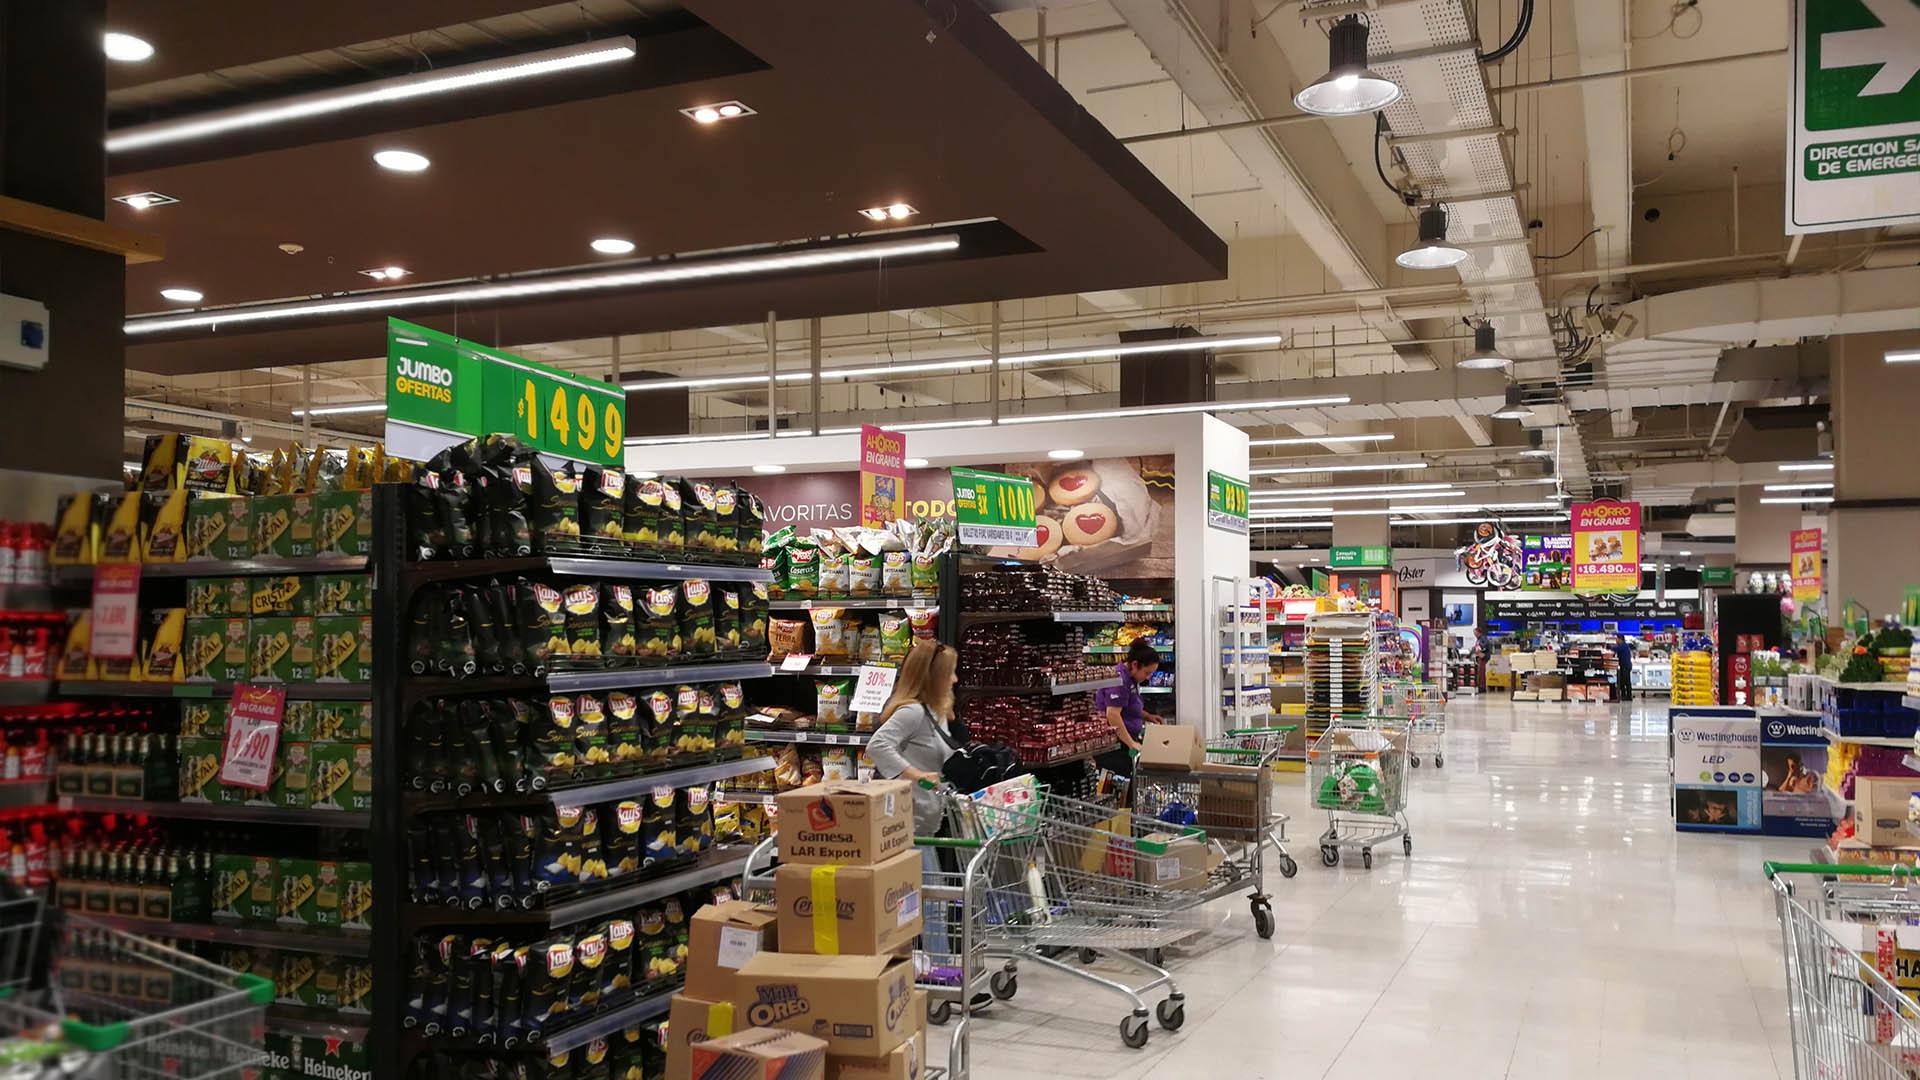 JUMBO supermarket in Brazil (1)